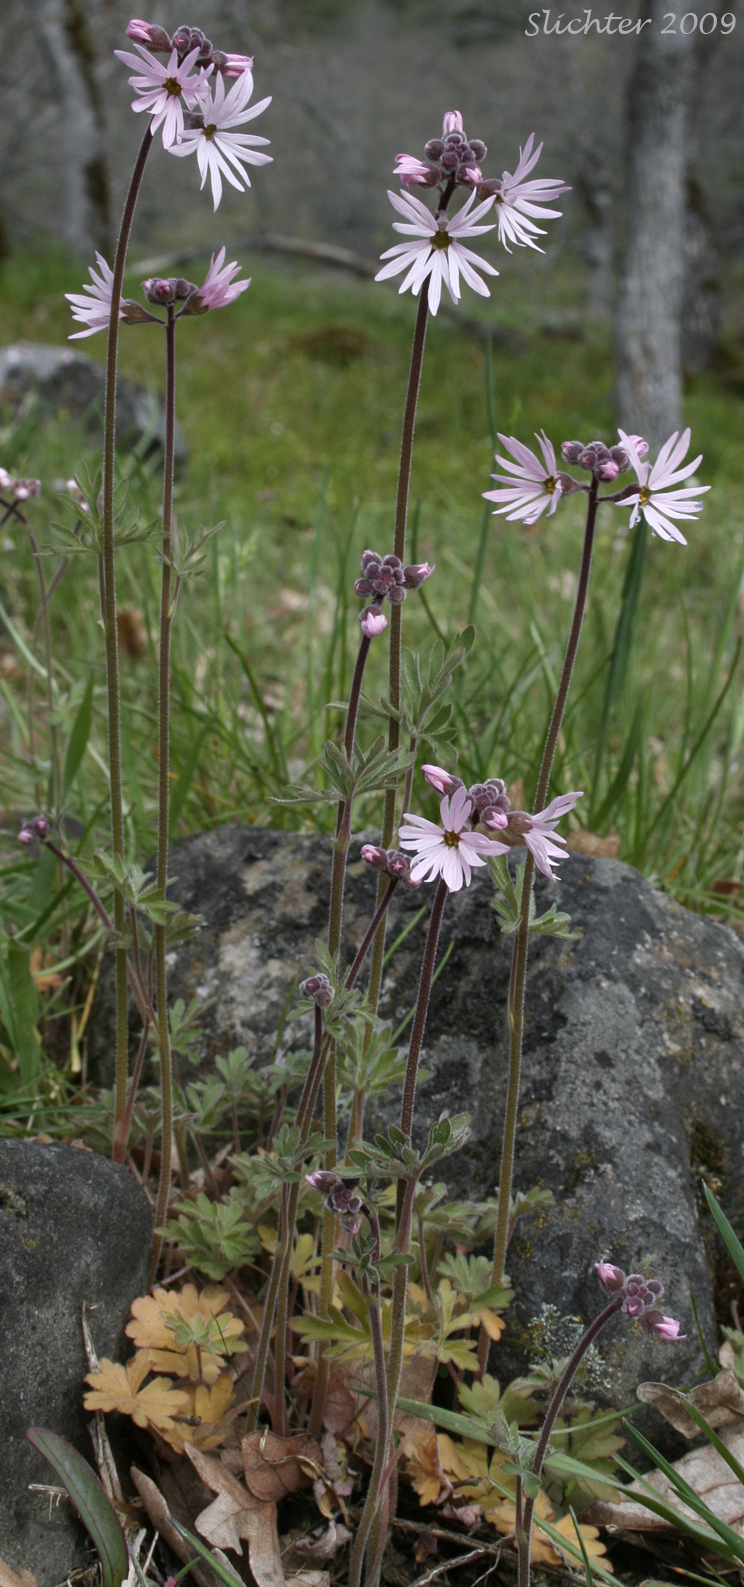 Small-flowered Prairie Star, Small-flowered Woodland-star: Lithophragma parviflorum var. parviflorum (Synonyms: Lithophragma parviflora, Lithophragma parviflorum)